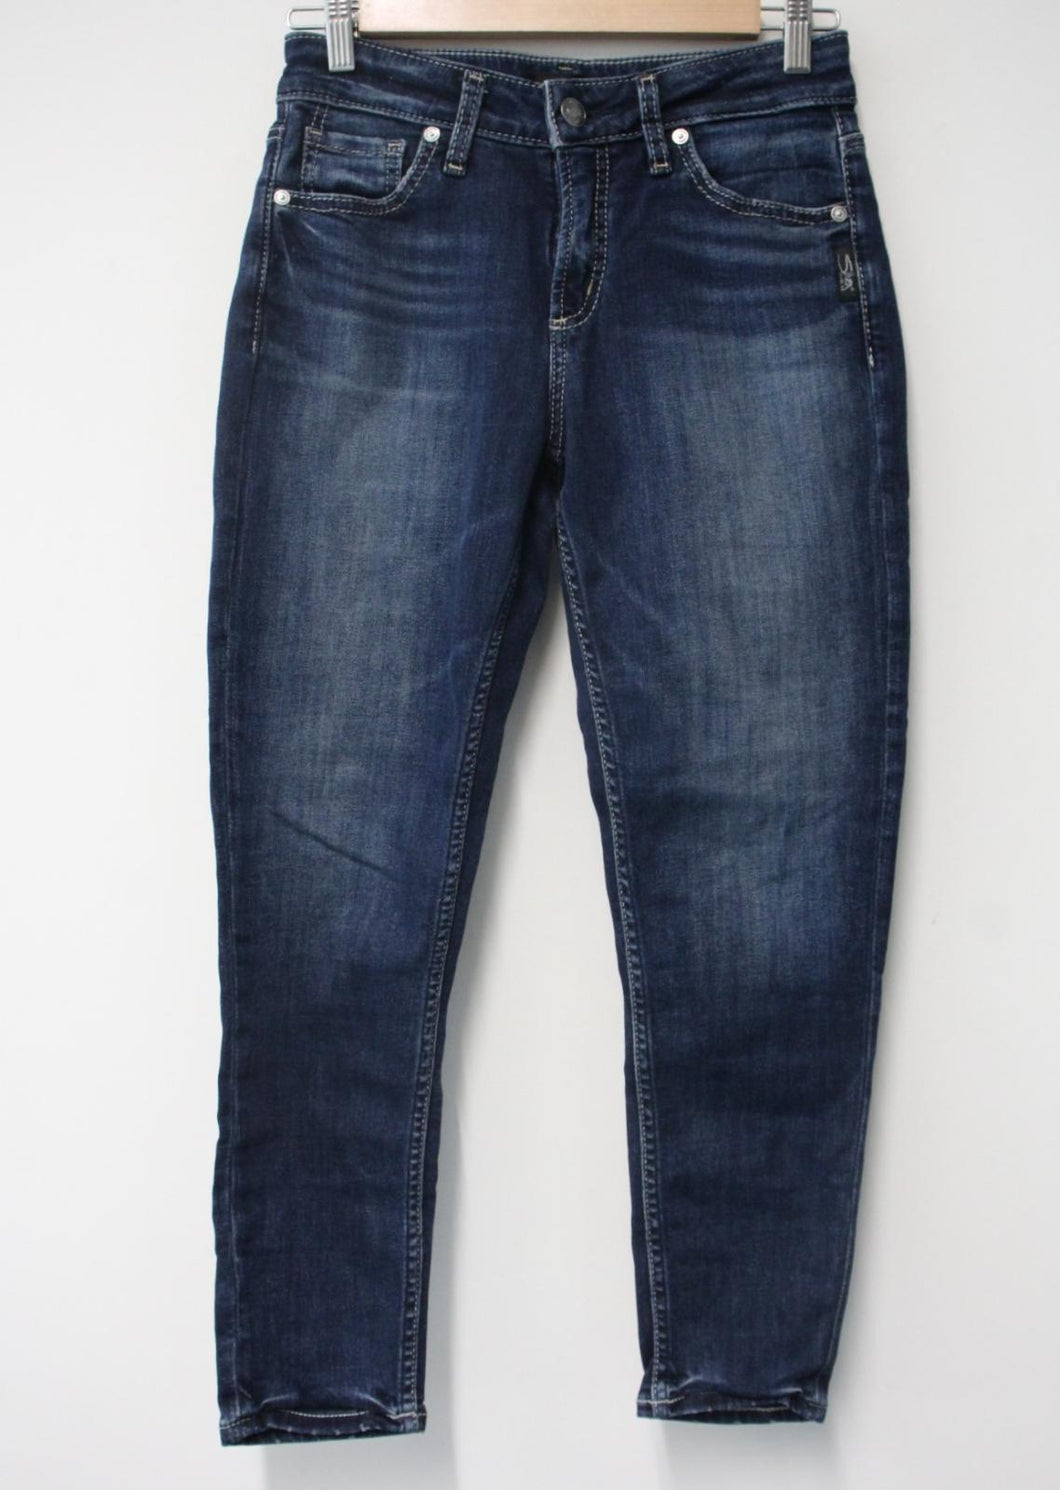 SILVER JEANS CO. Ladies Dark Blue Cotton Blend Avery Skinny Crop Jeans W27 L25